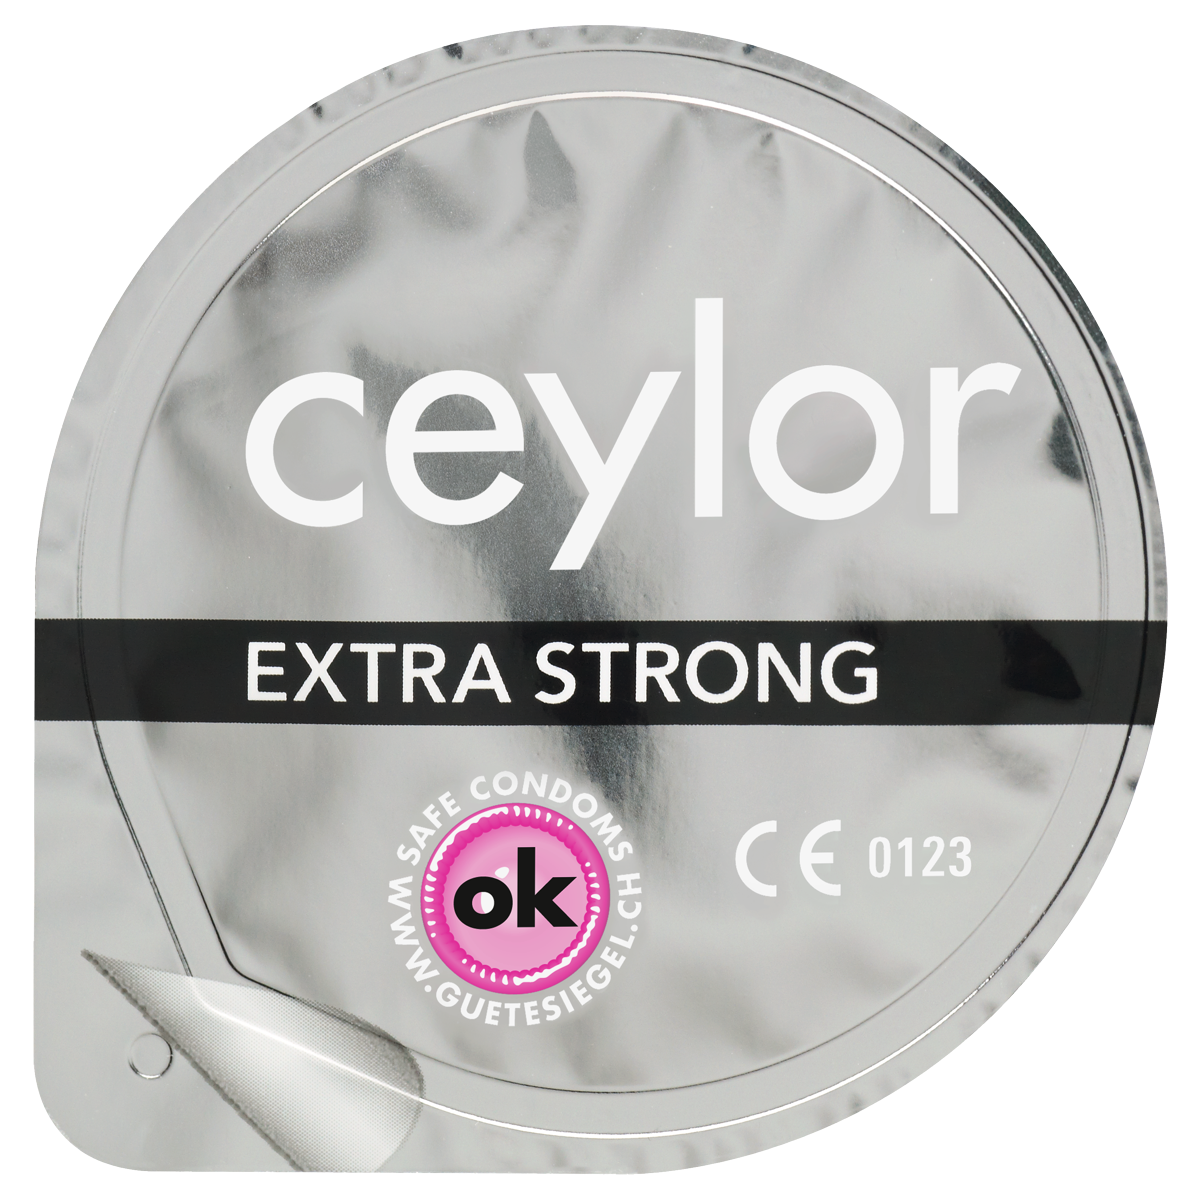 Ceylor Extra Strong Präservativ 6 Stück